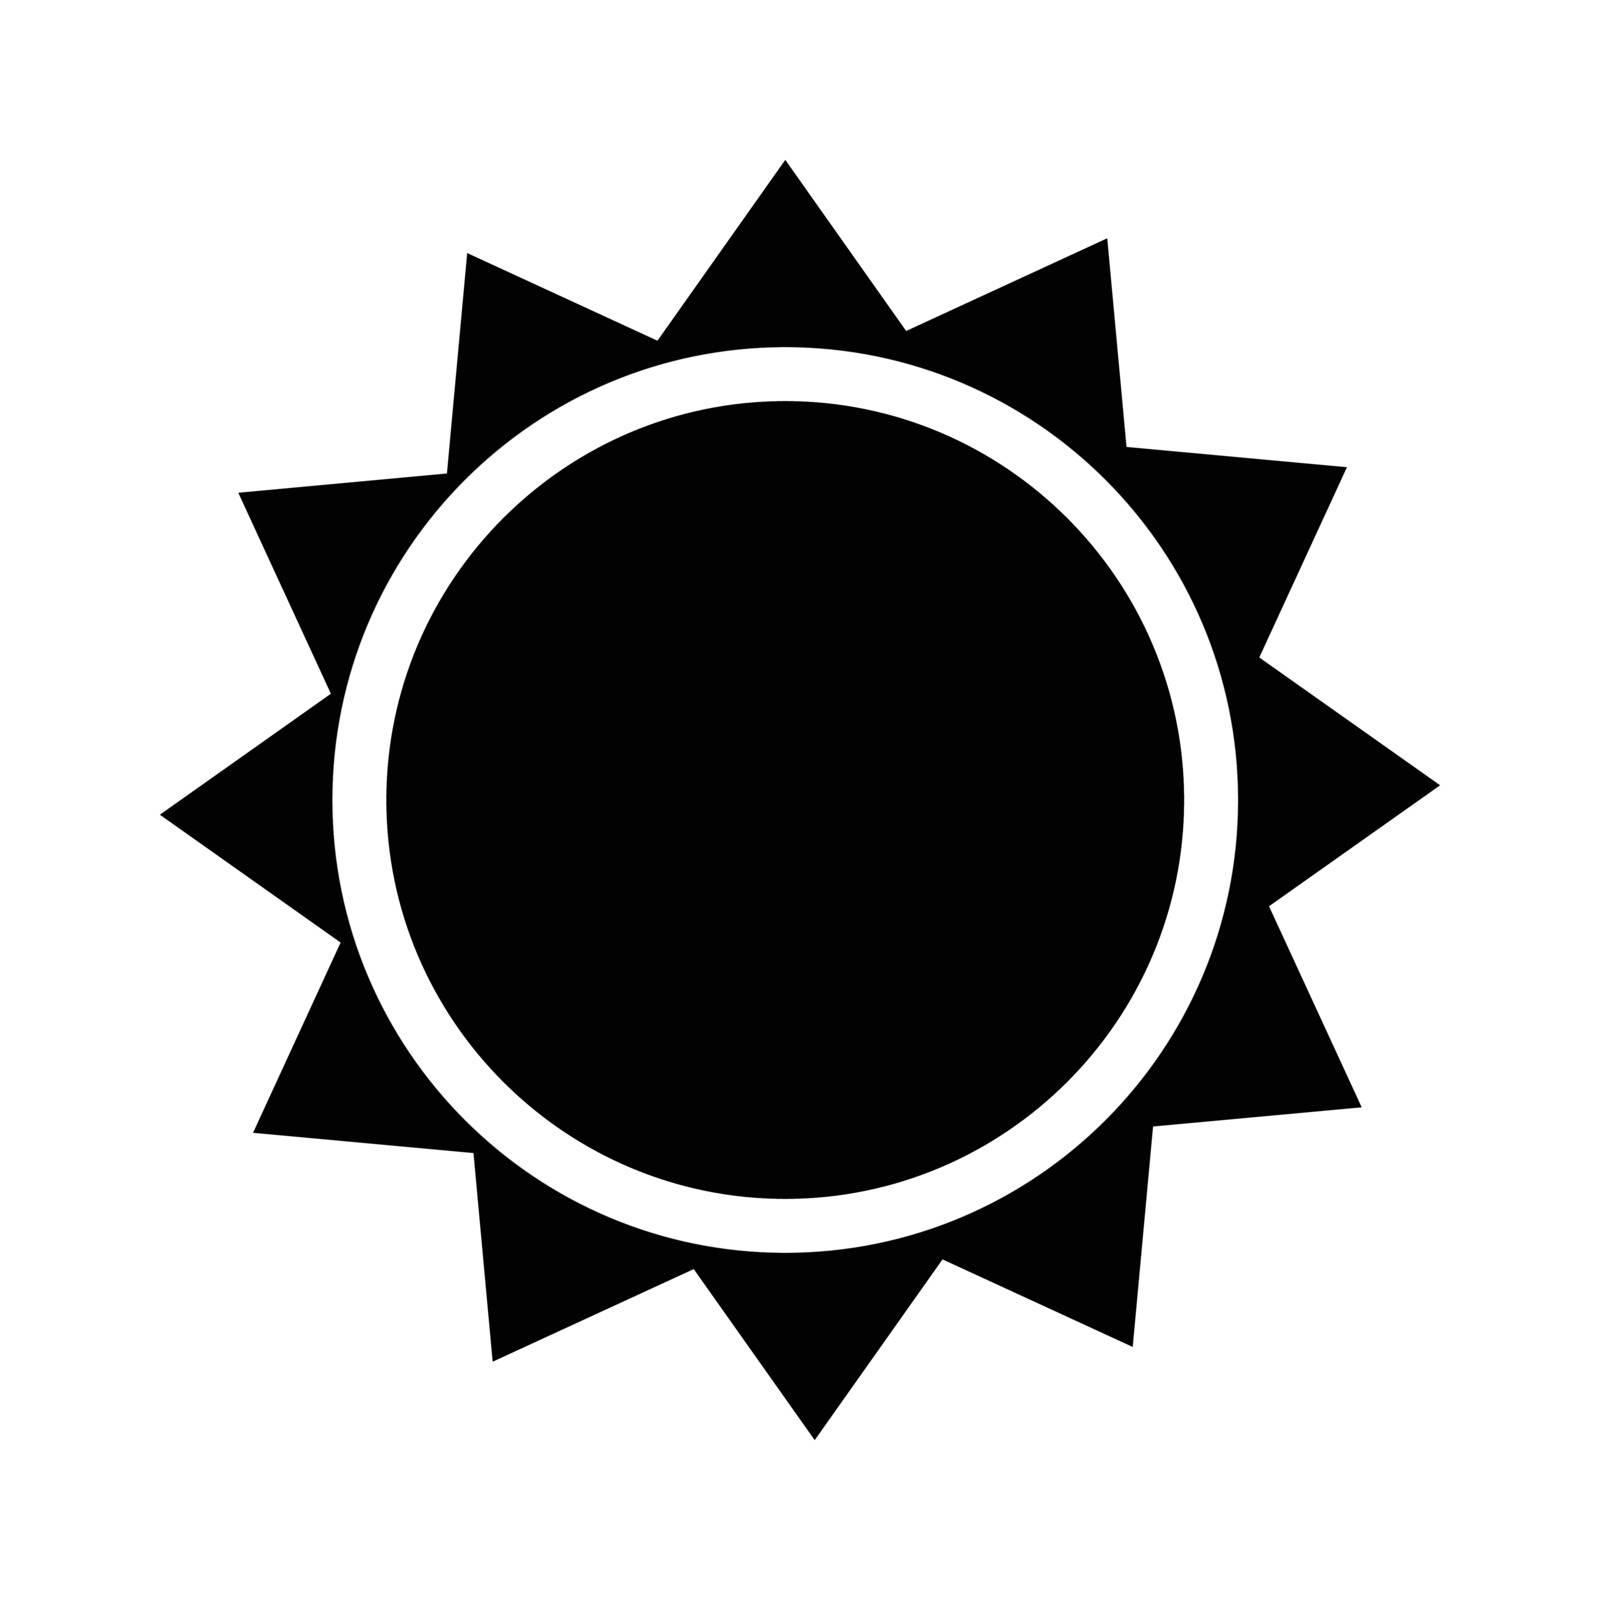 Sun icon, iconic symbol on white background. Vector Iconic Design.